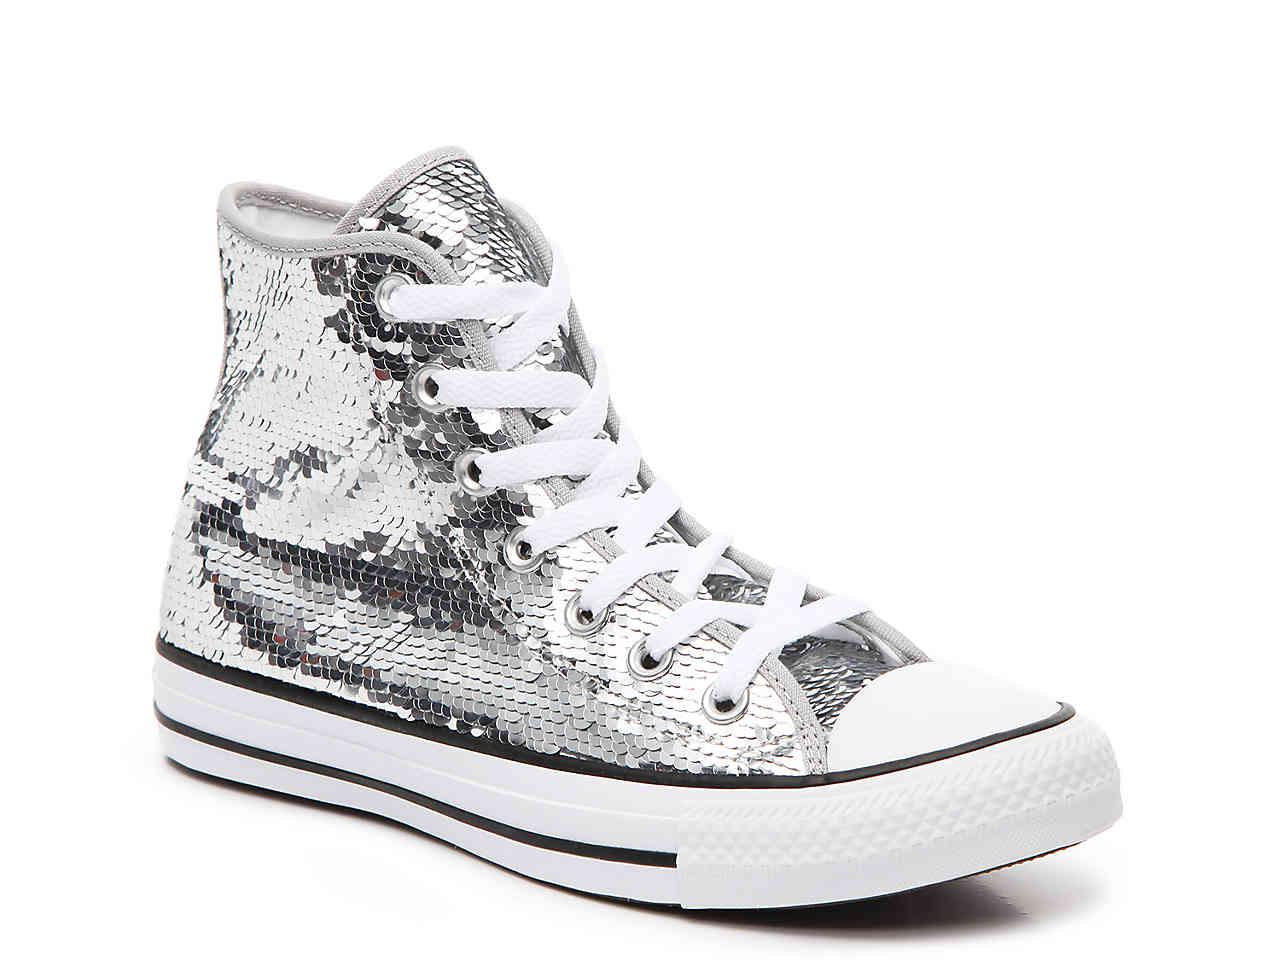 silver sparkly converse high tops